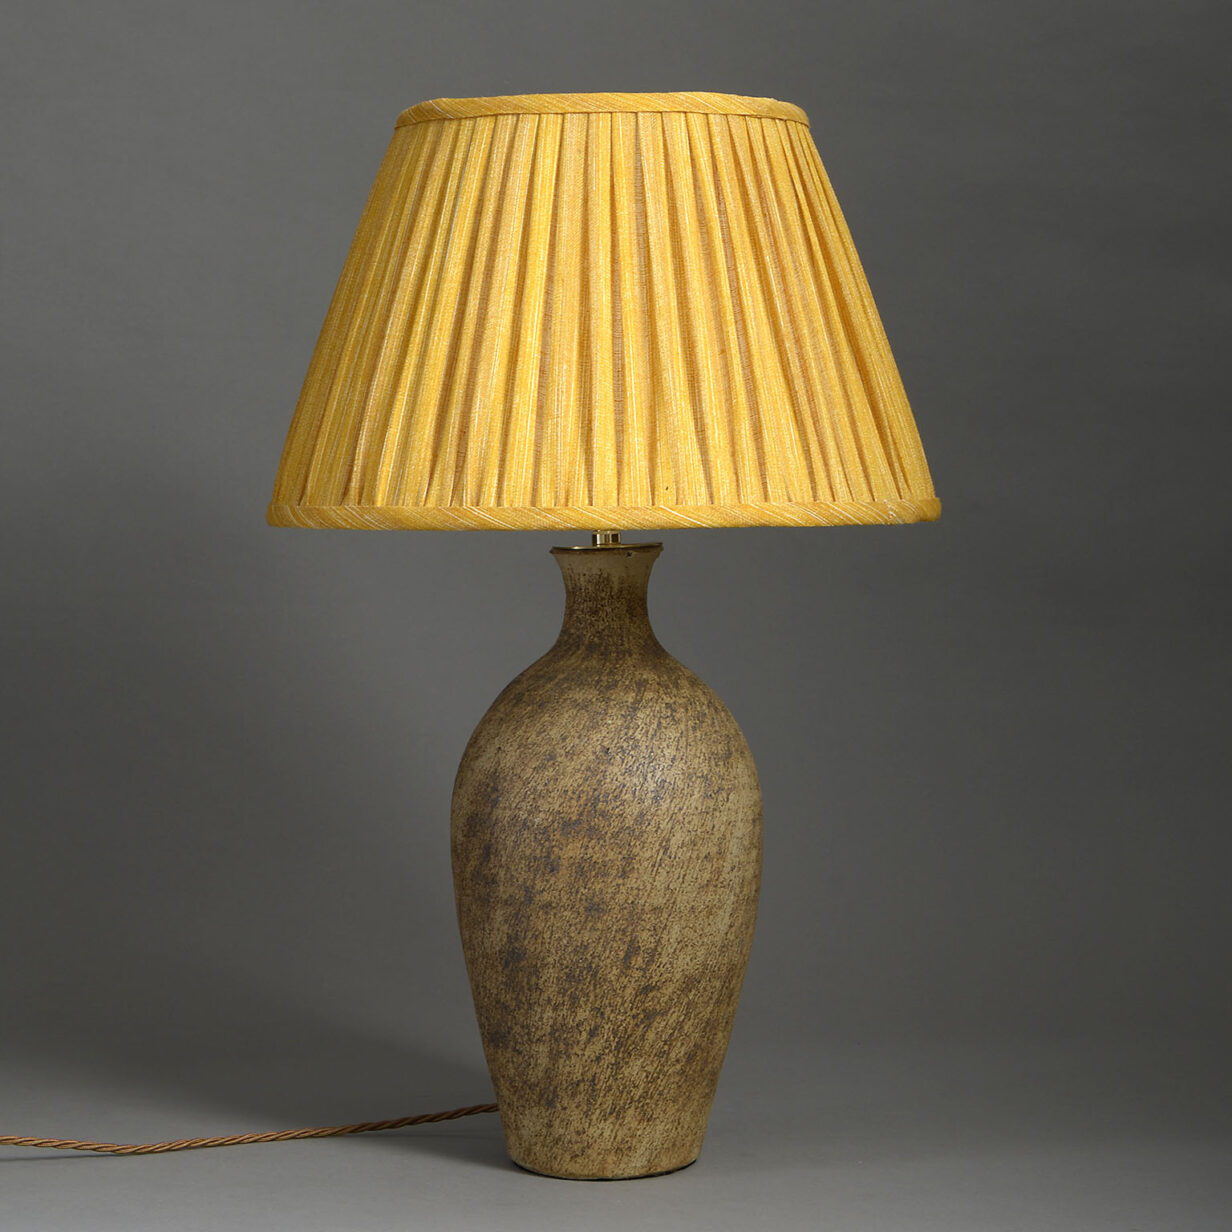 Ceramic bottle lamp